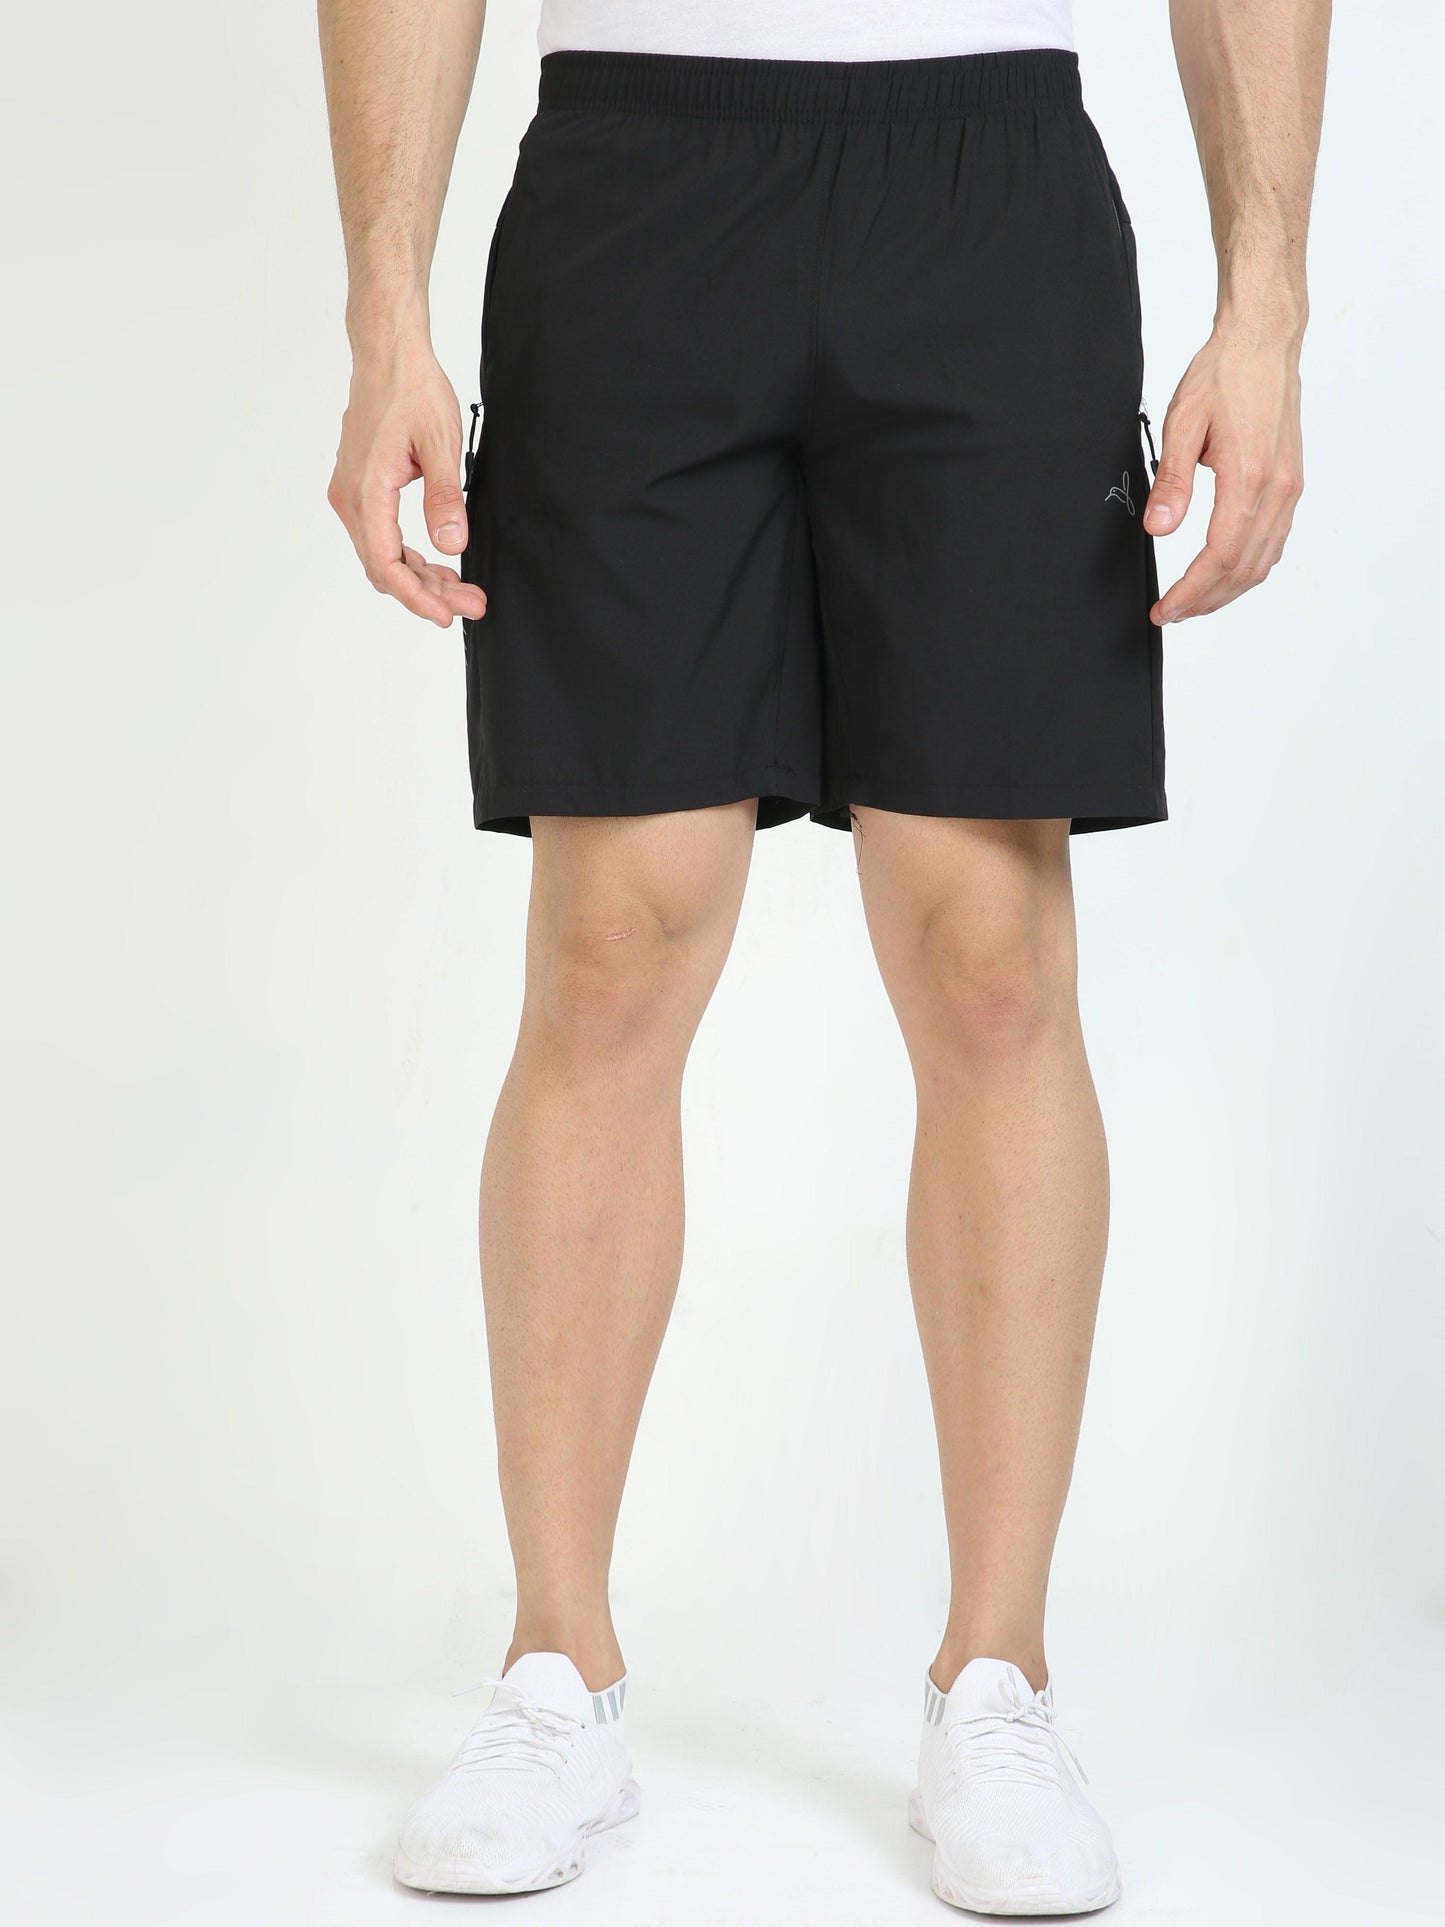 Carbon Black Sports Shorts